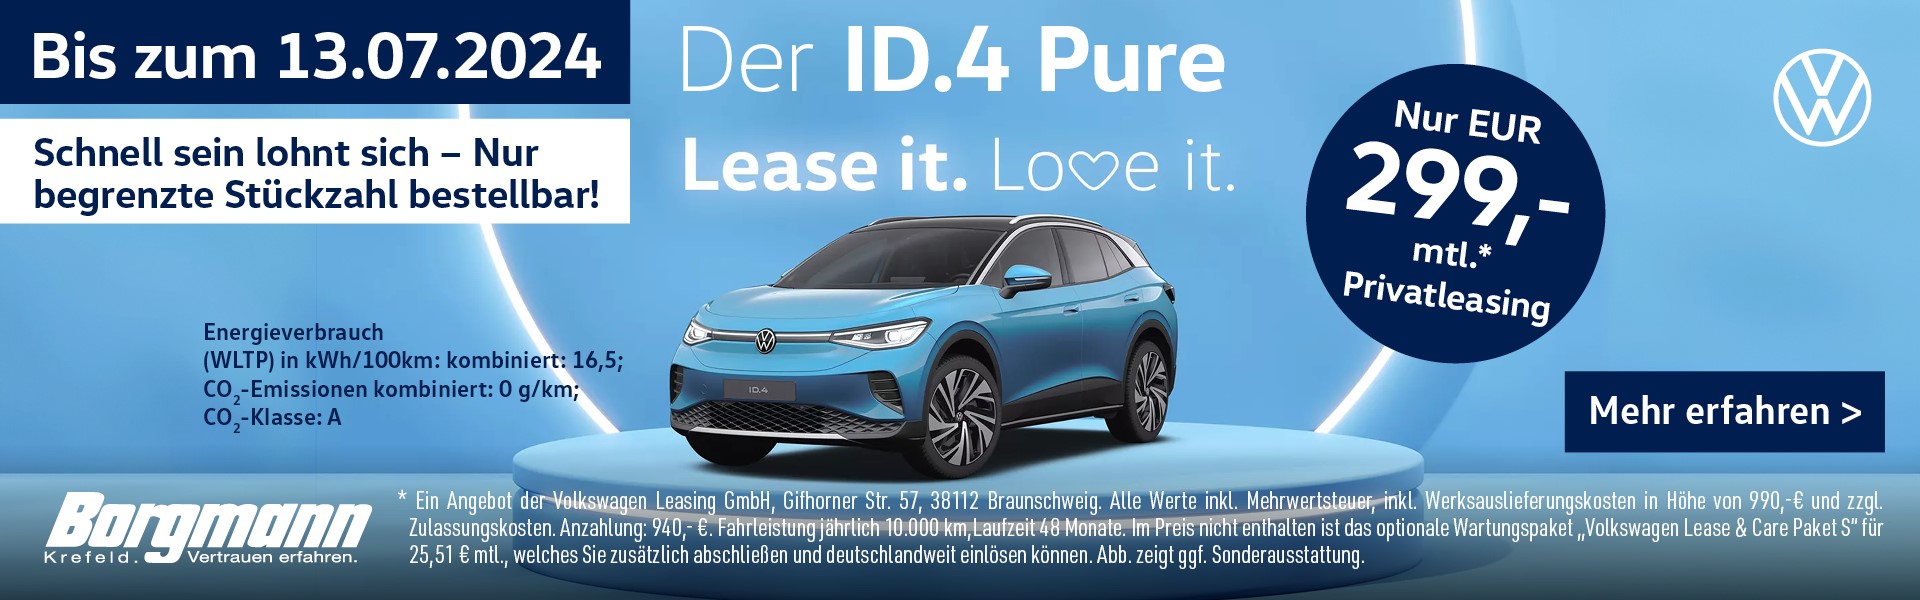 Elektro-Sonderaktion: VW ID.4